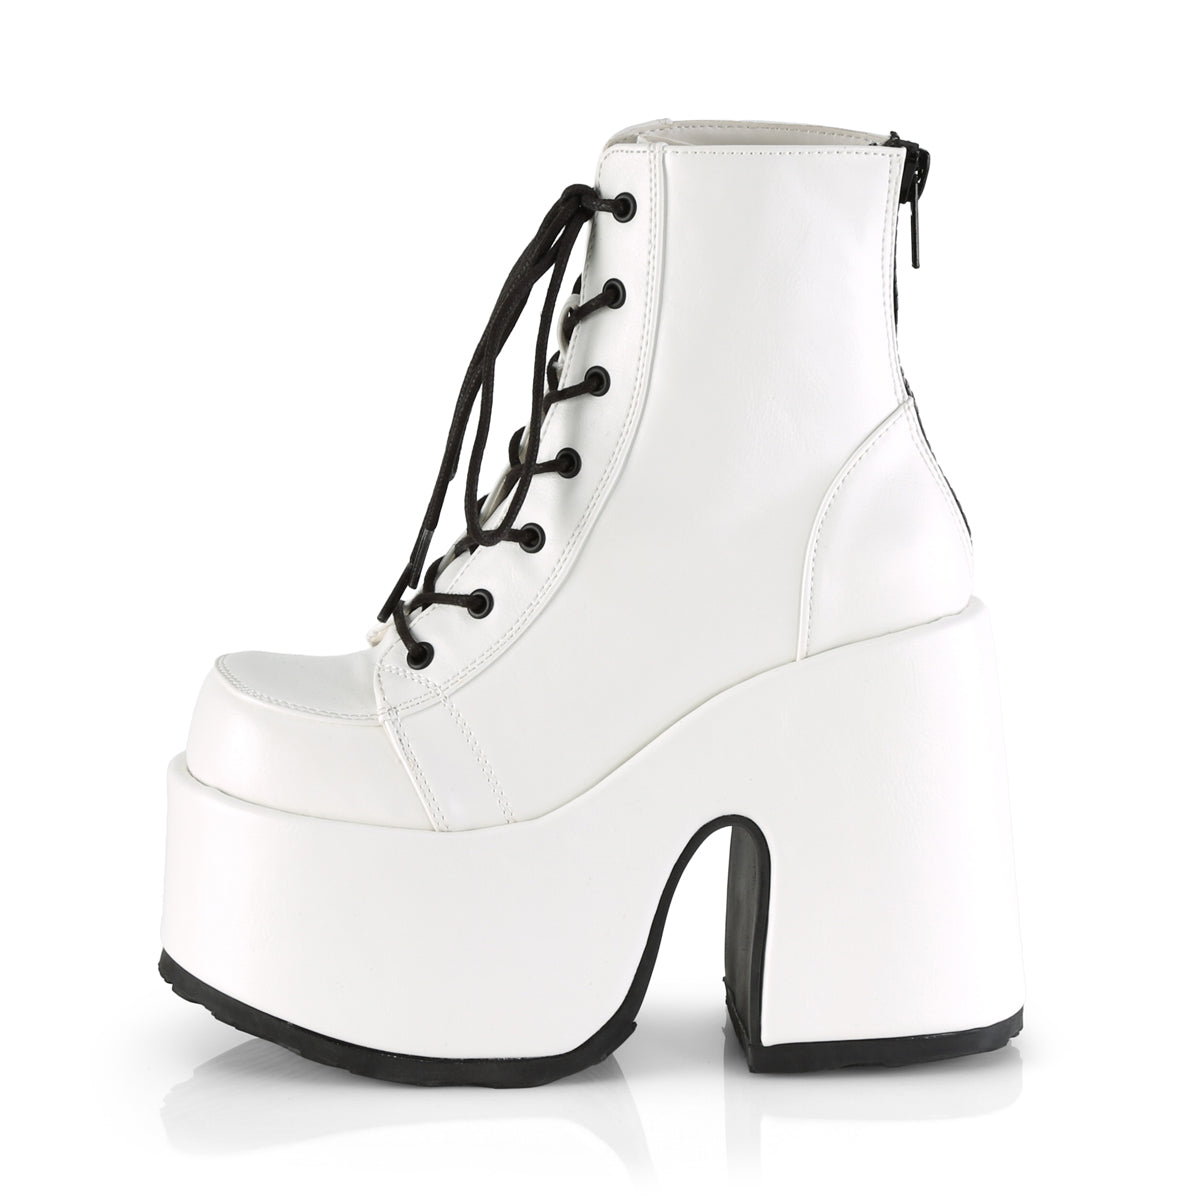 CAMEL-203 Demonia White Vegan Leather Women's Ankle Boots [Demonia Cult Alternative Footwear]